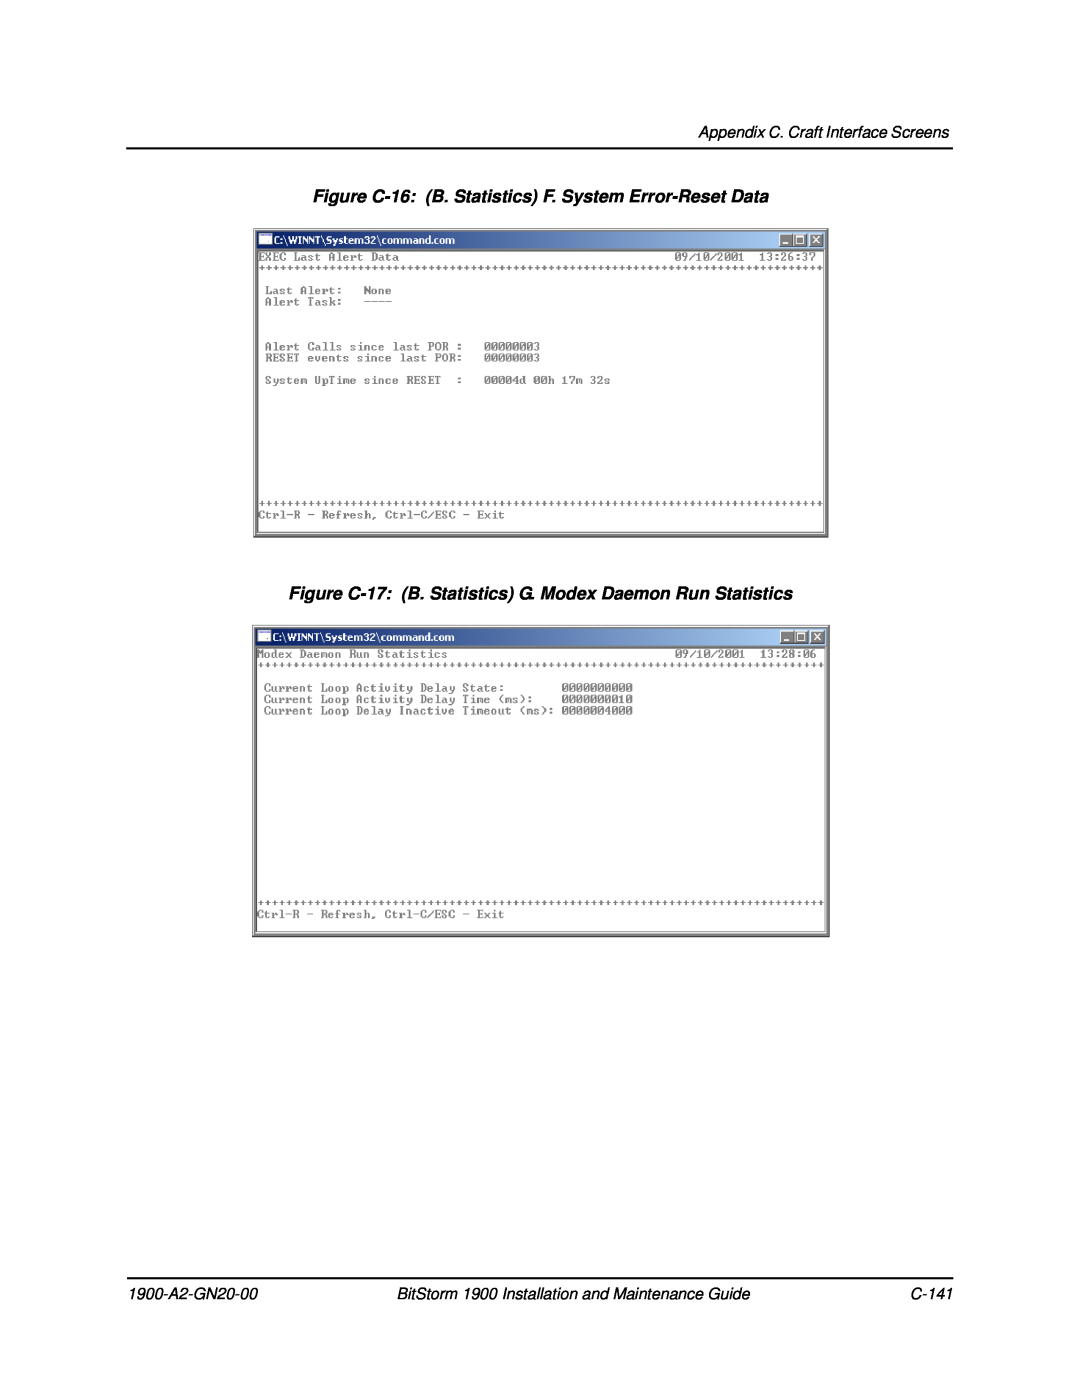 Paradyne Figure C-16 B. Statistics F. System Error-Reset Data, Appendix C. Craft Interface Screens, 1900-A2-GN20-00 